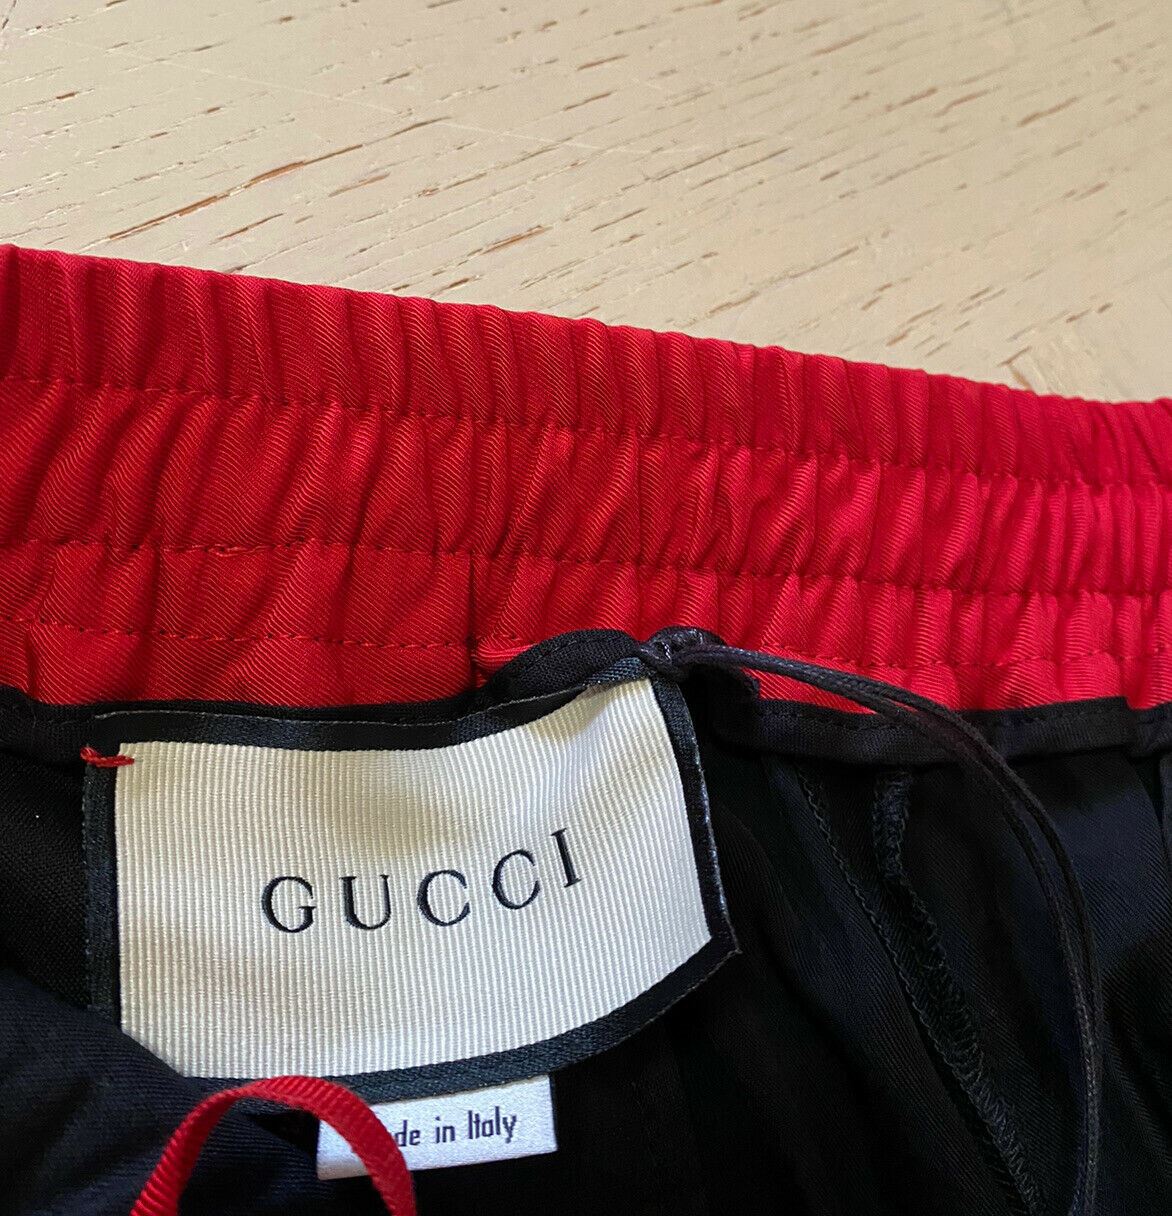 Neue 1490 $ Gucci Herren Jegging Triacetate Hose Schwarz 36 US (52 Eu) Hergestellt in Italien